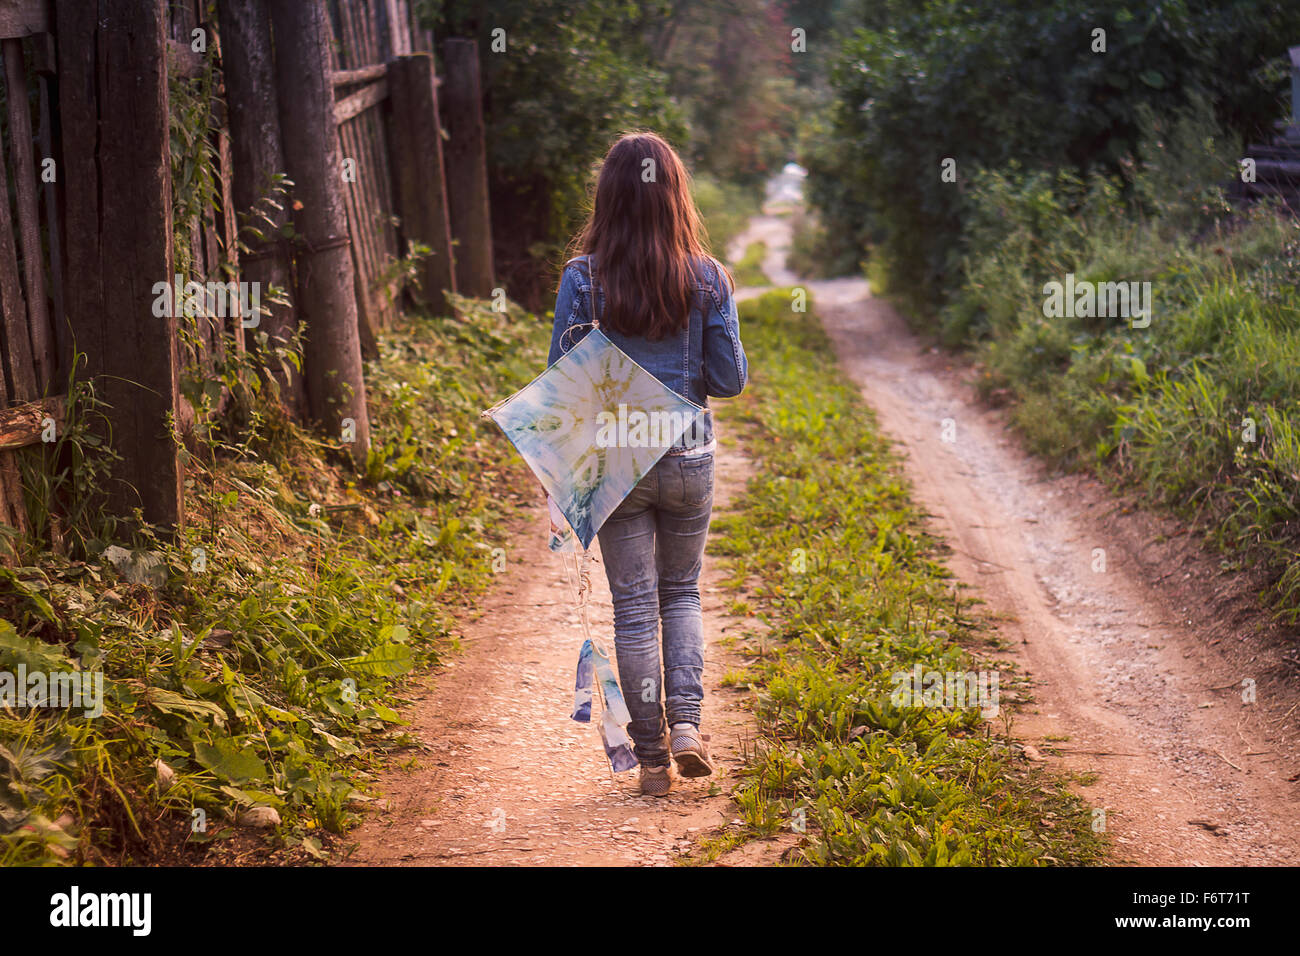 Caucasian teenage girl carrying kite on dirt road Stock Photo